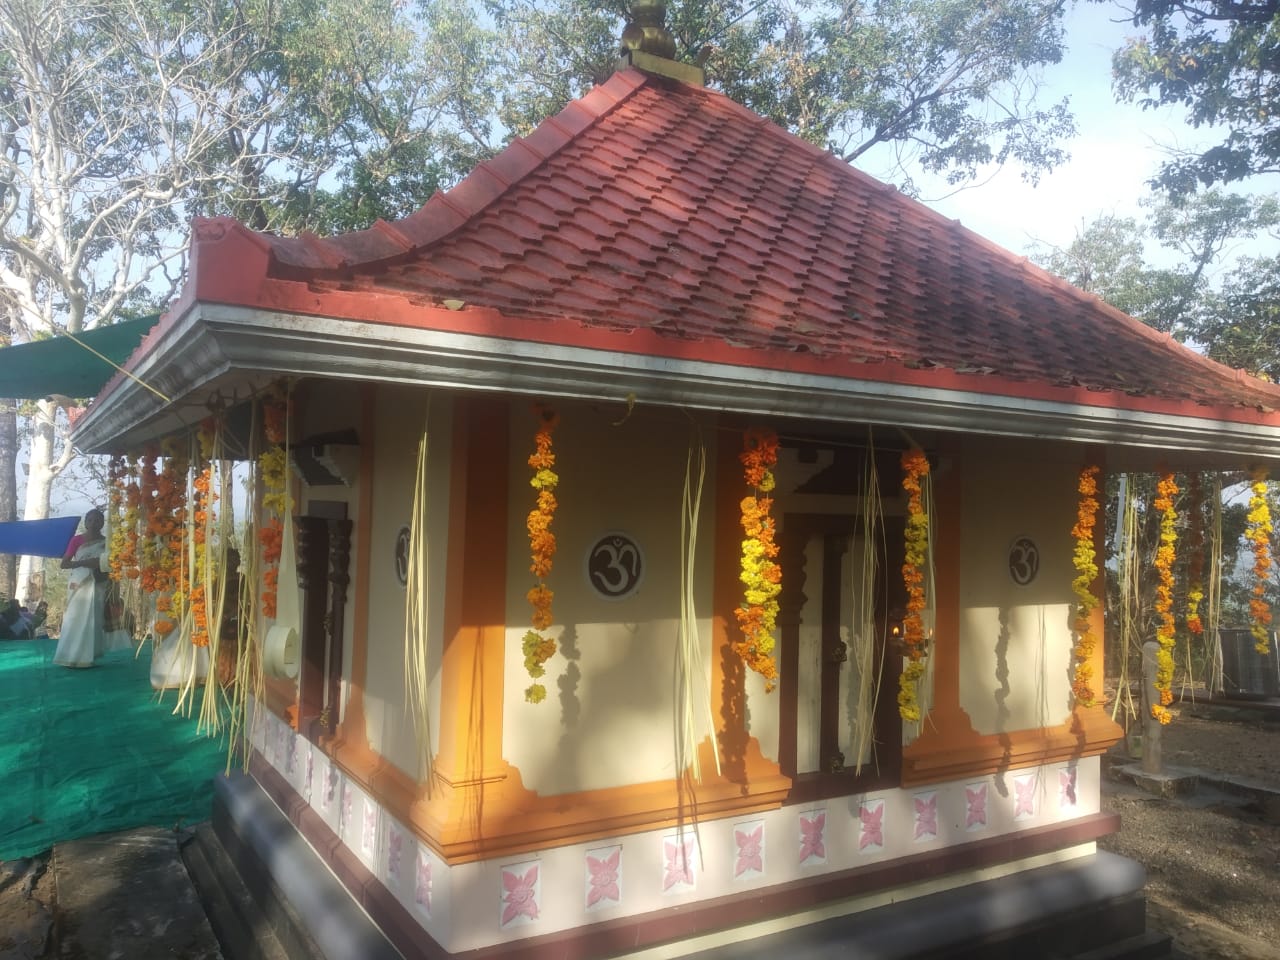 A memorable visit to “Kulakkunnel Shri Dharma Shastha Kshetram” — Ayyappa Hindu temple, Kerala, INDIA on 14th January 2023, Saturday.